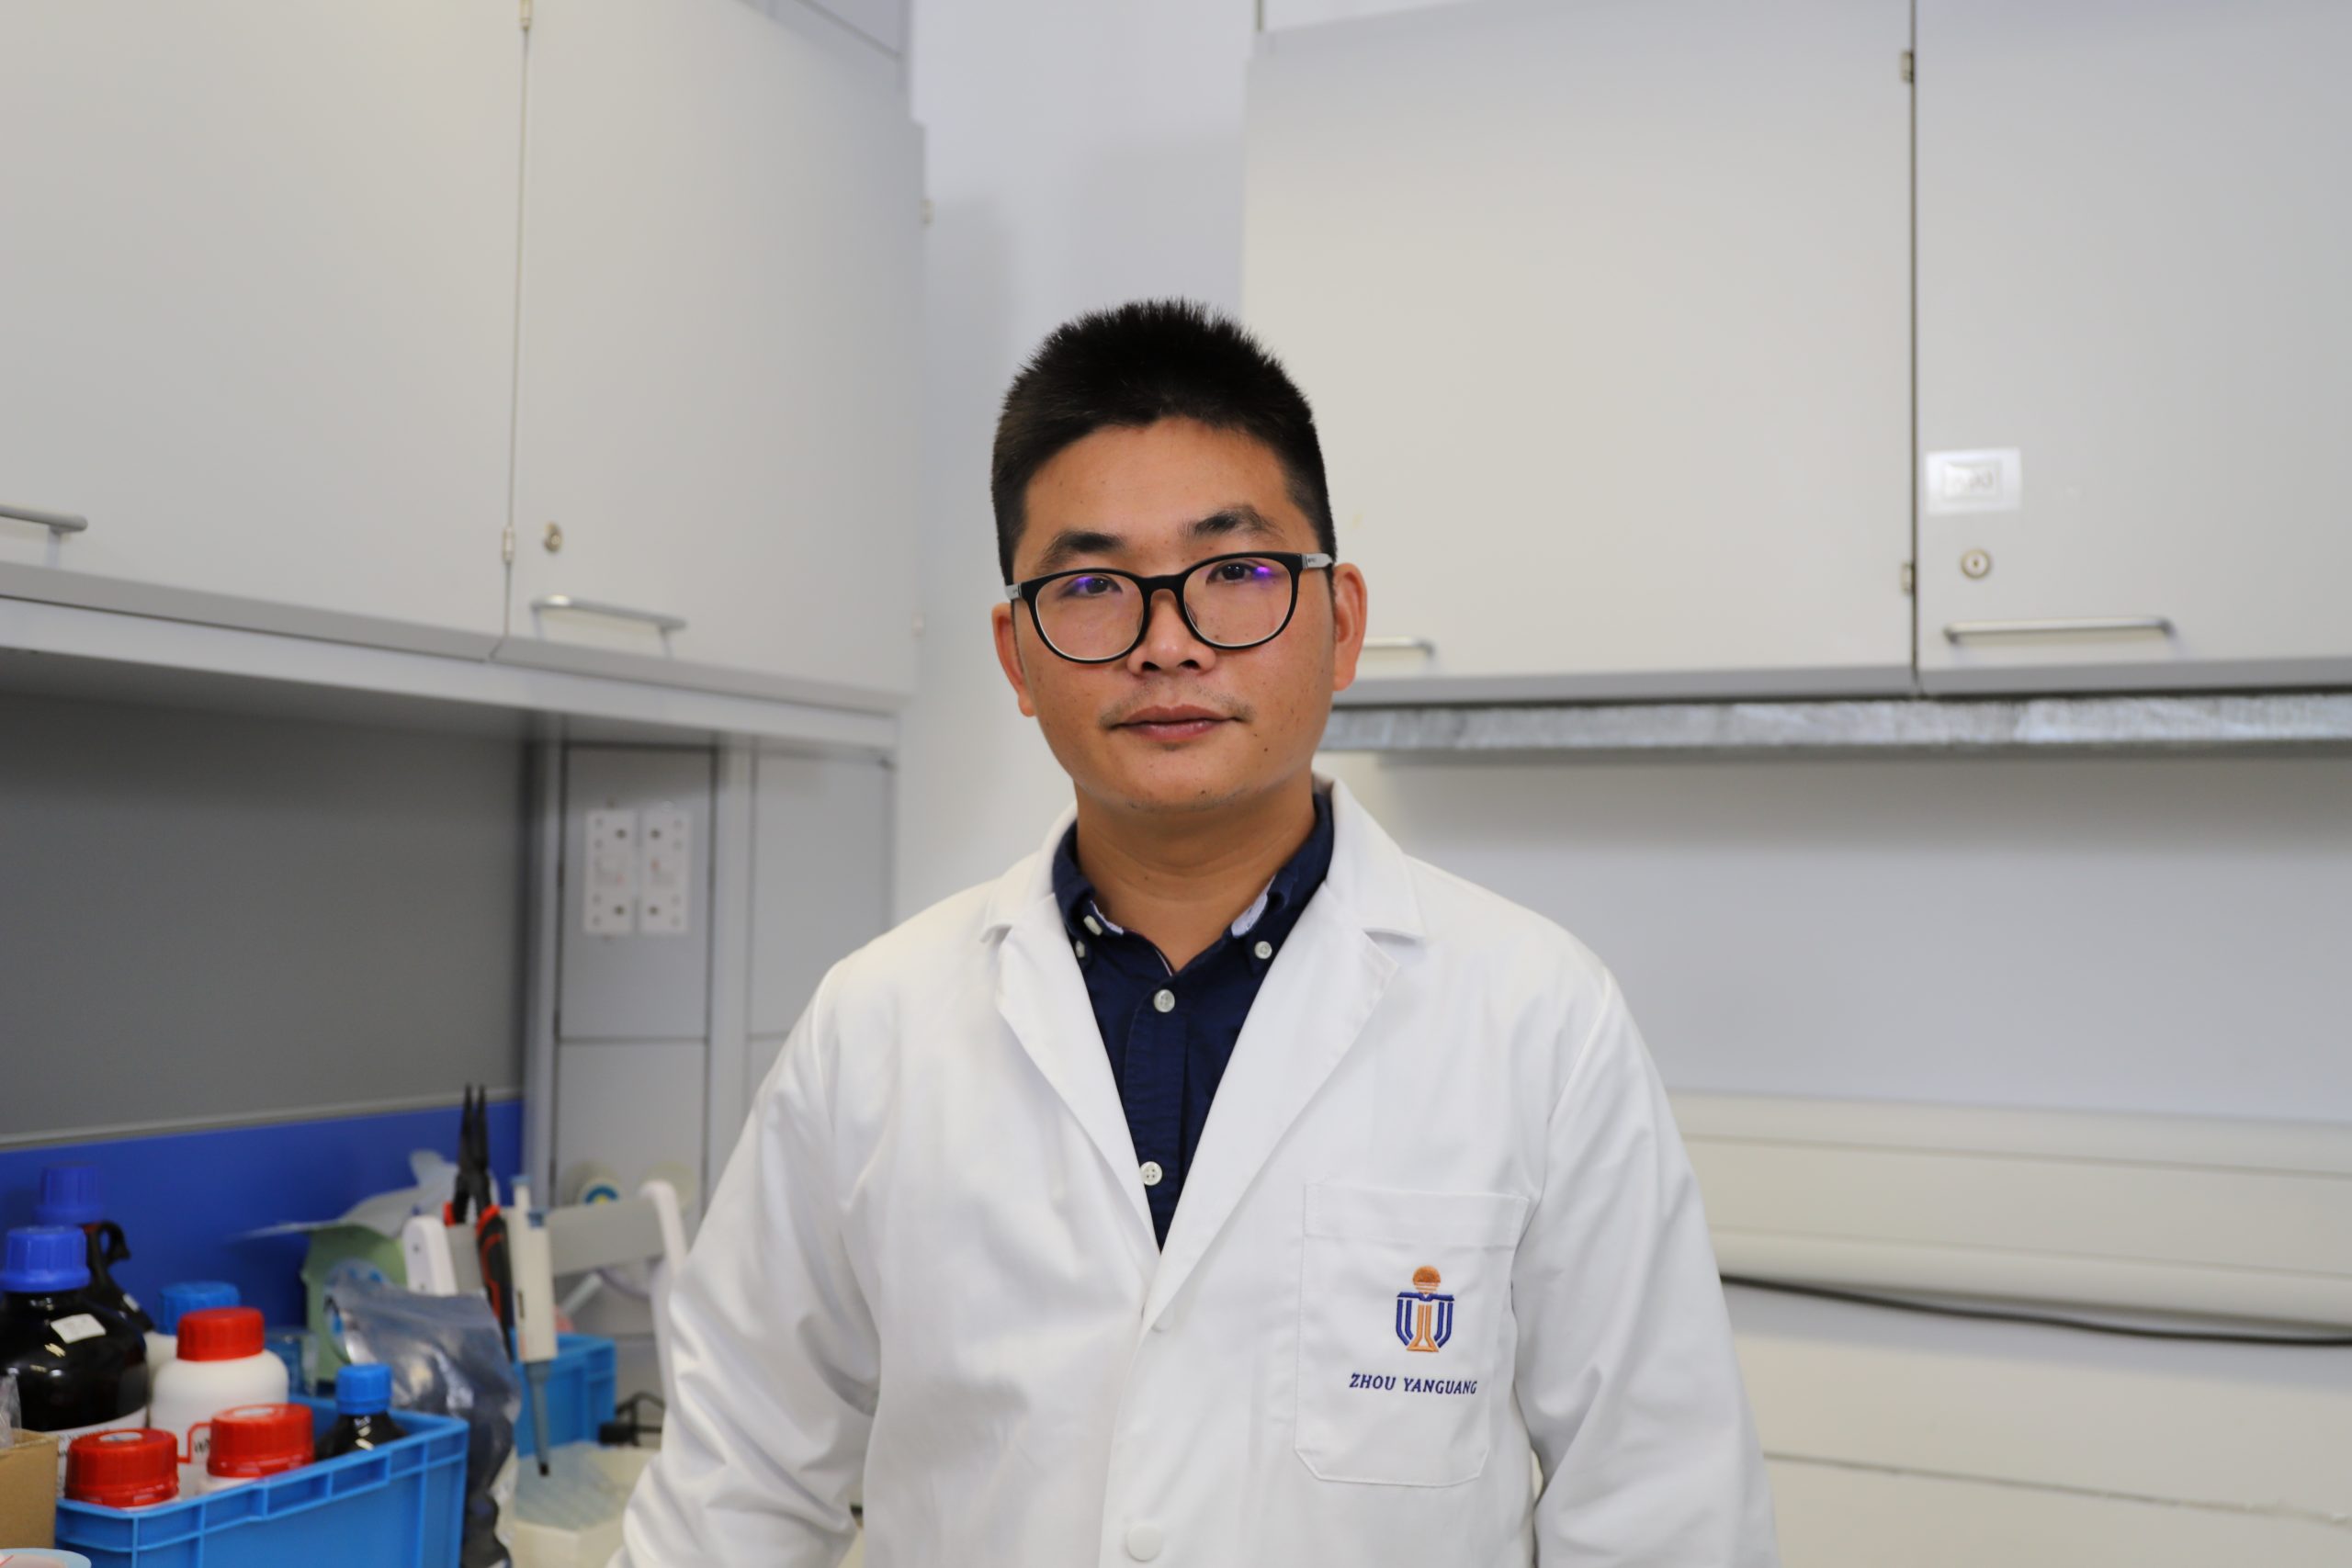 Award winner: Dr. Yanguang Zhou - Pioneer of “Carbon Neutrality”